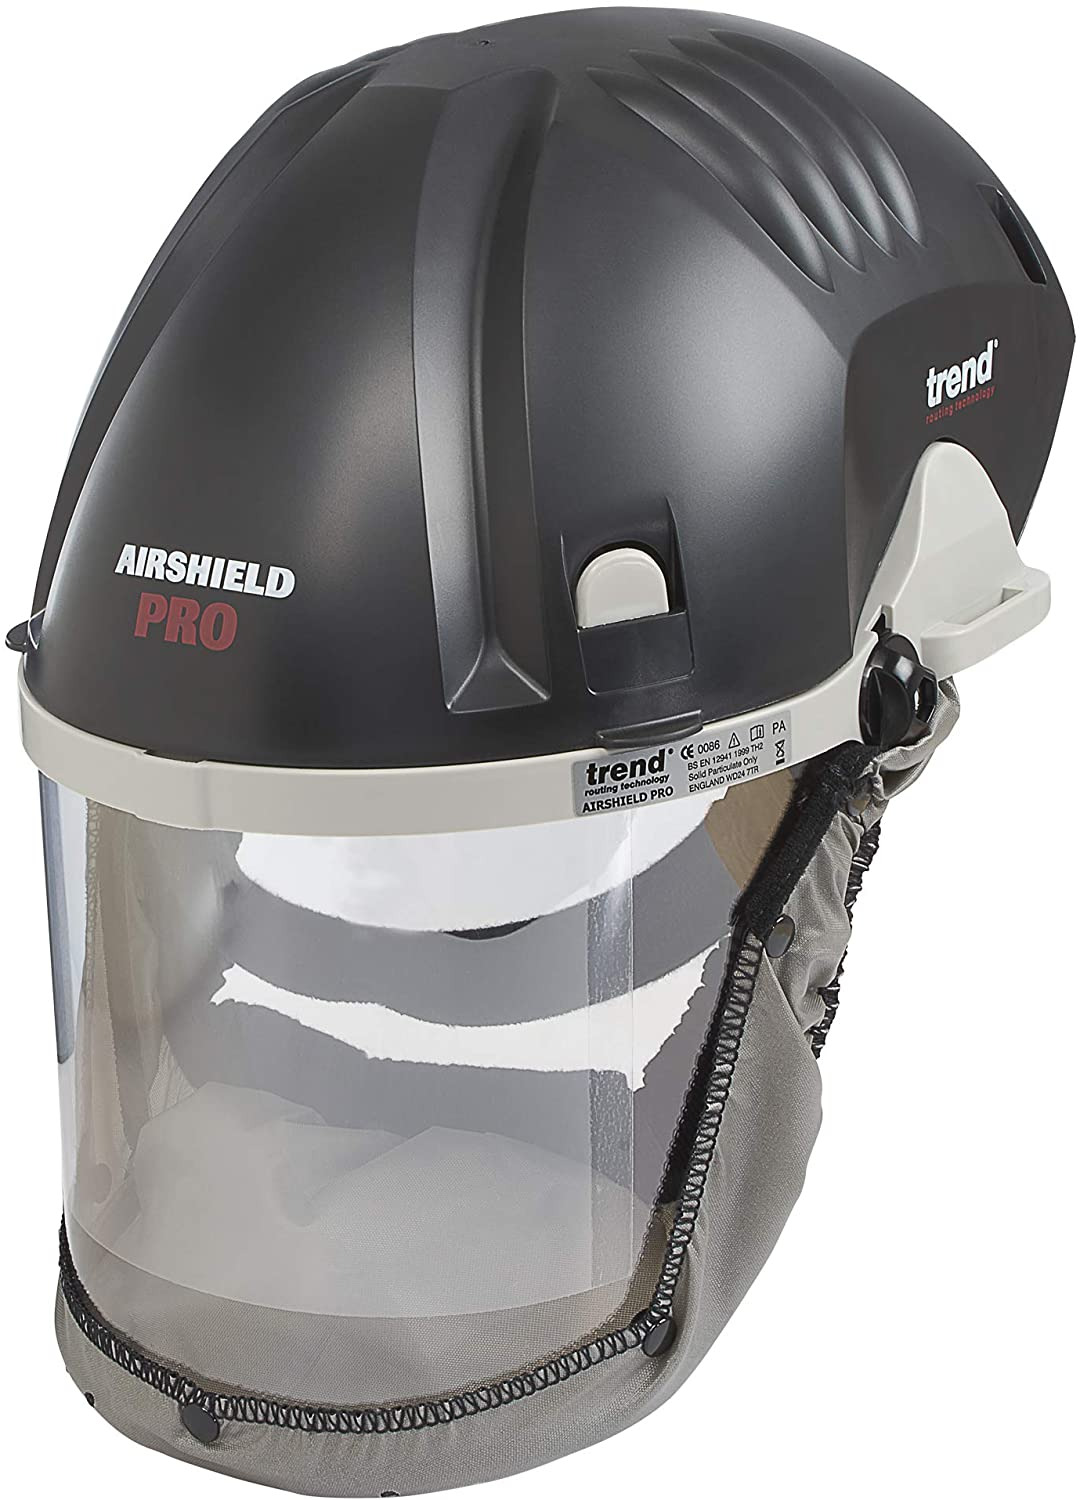 Airshield Pro Full Faceshield, Dust Protector, Battery Powered, Air Circulating